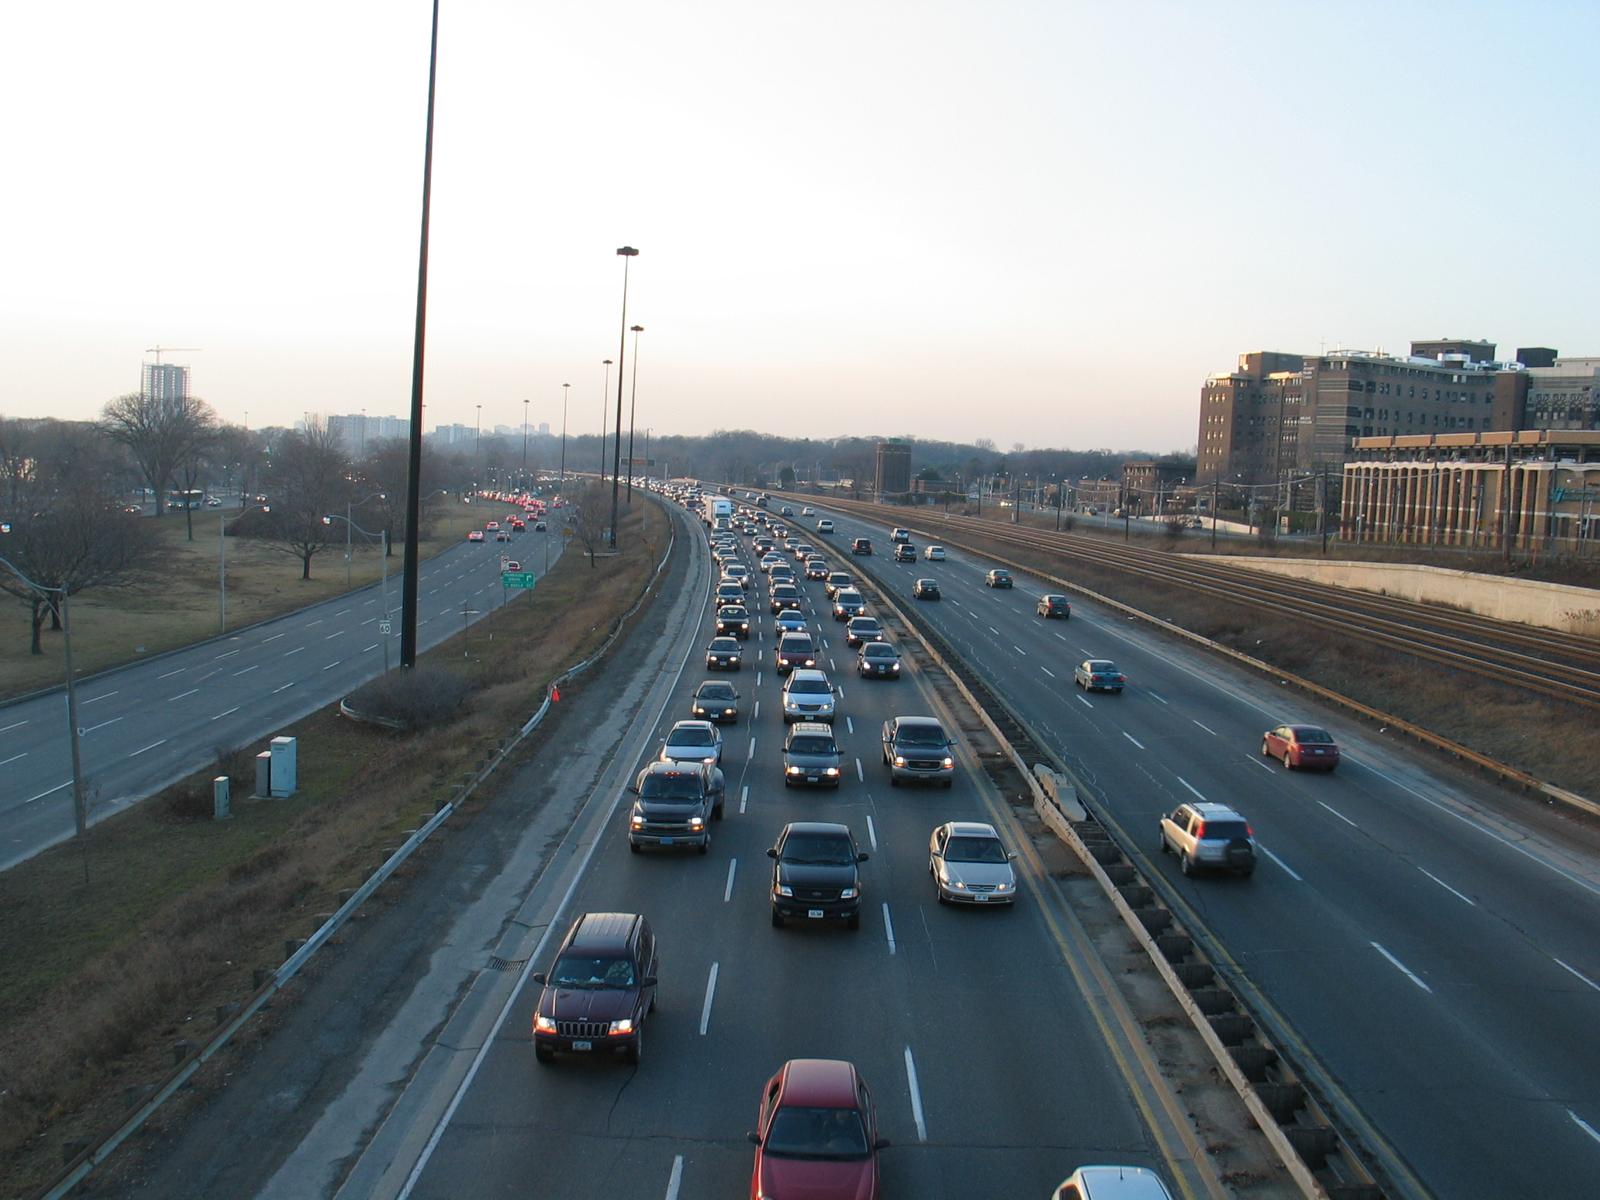 The Gardinier Expressway